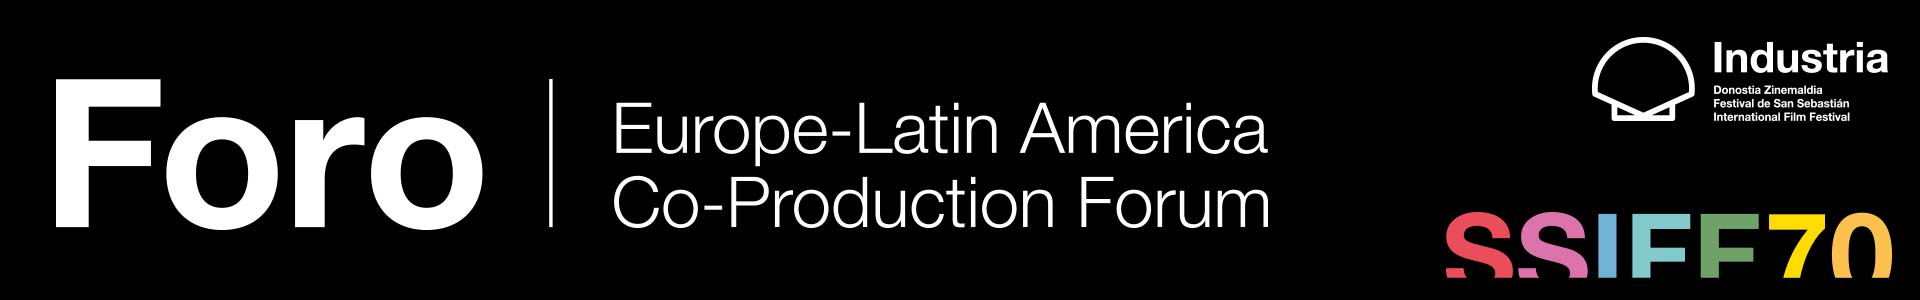 Europe-Latin America Co-Production Forum